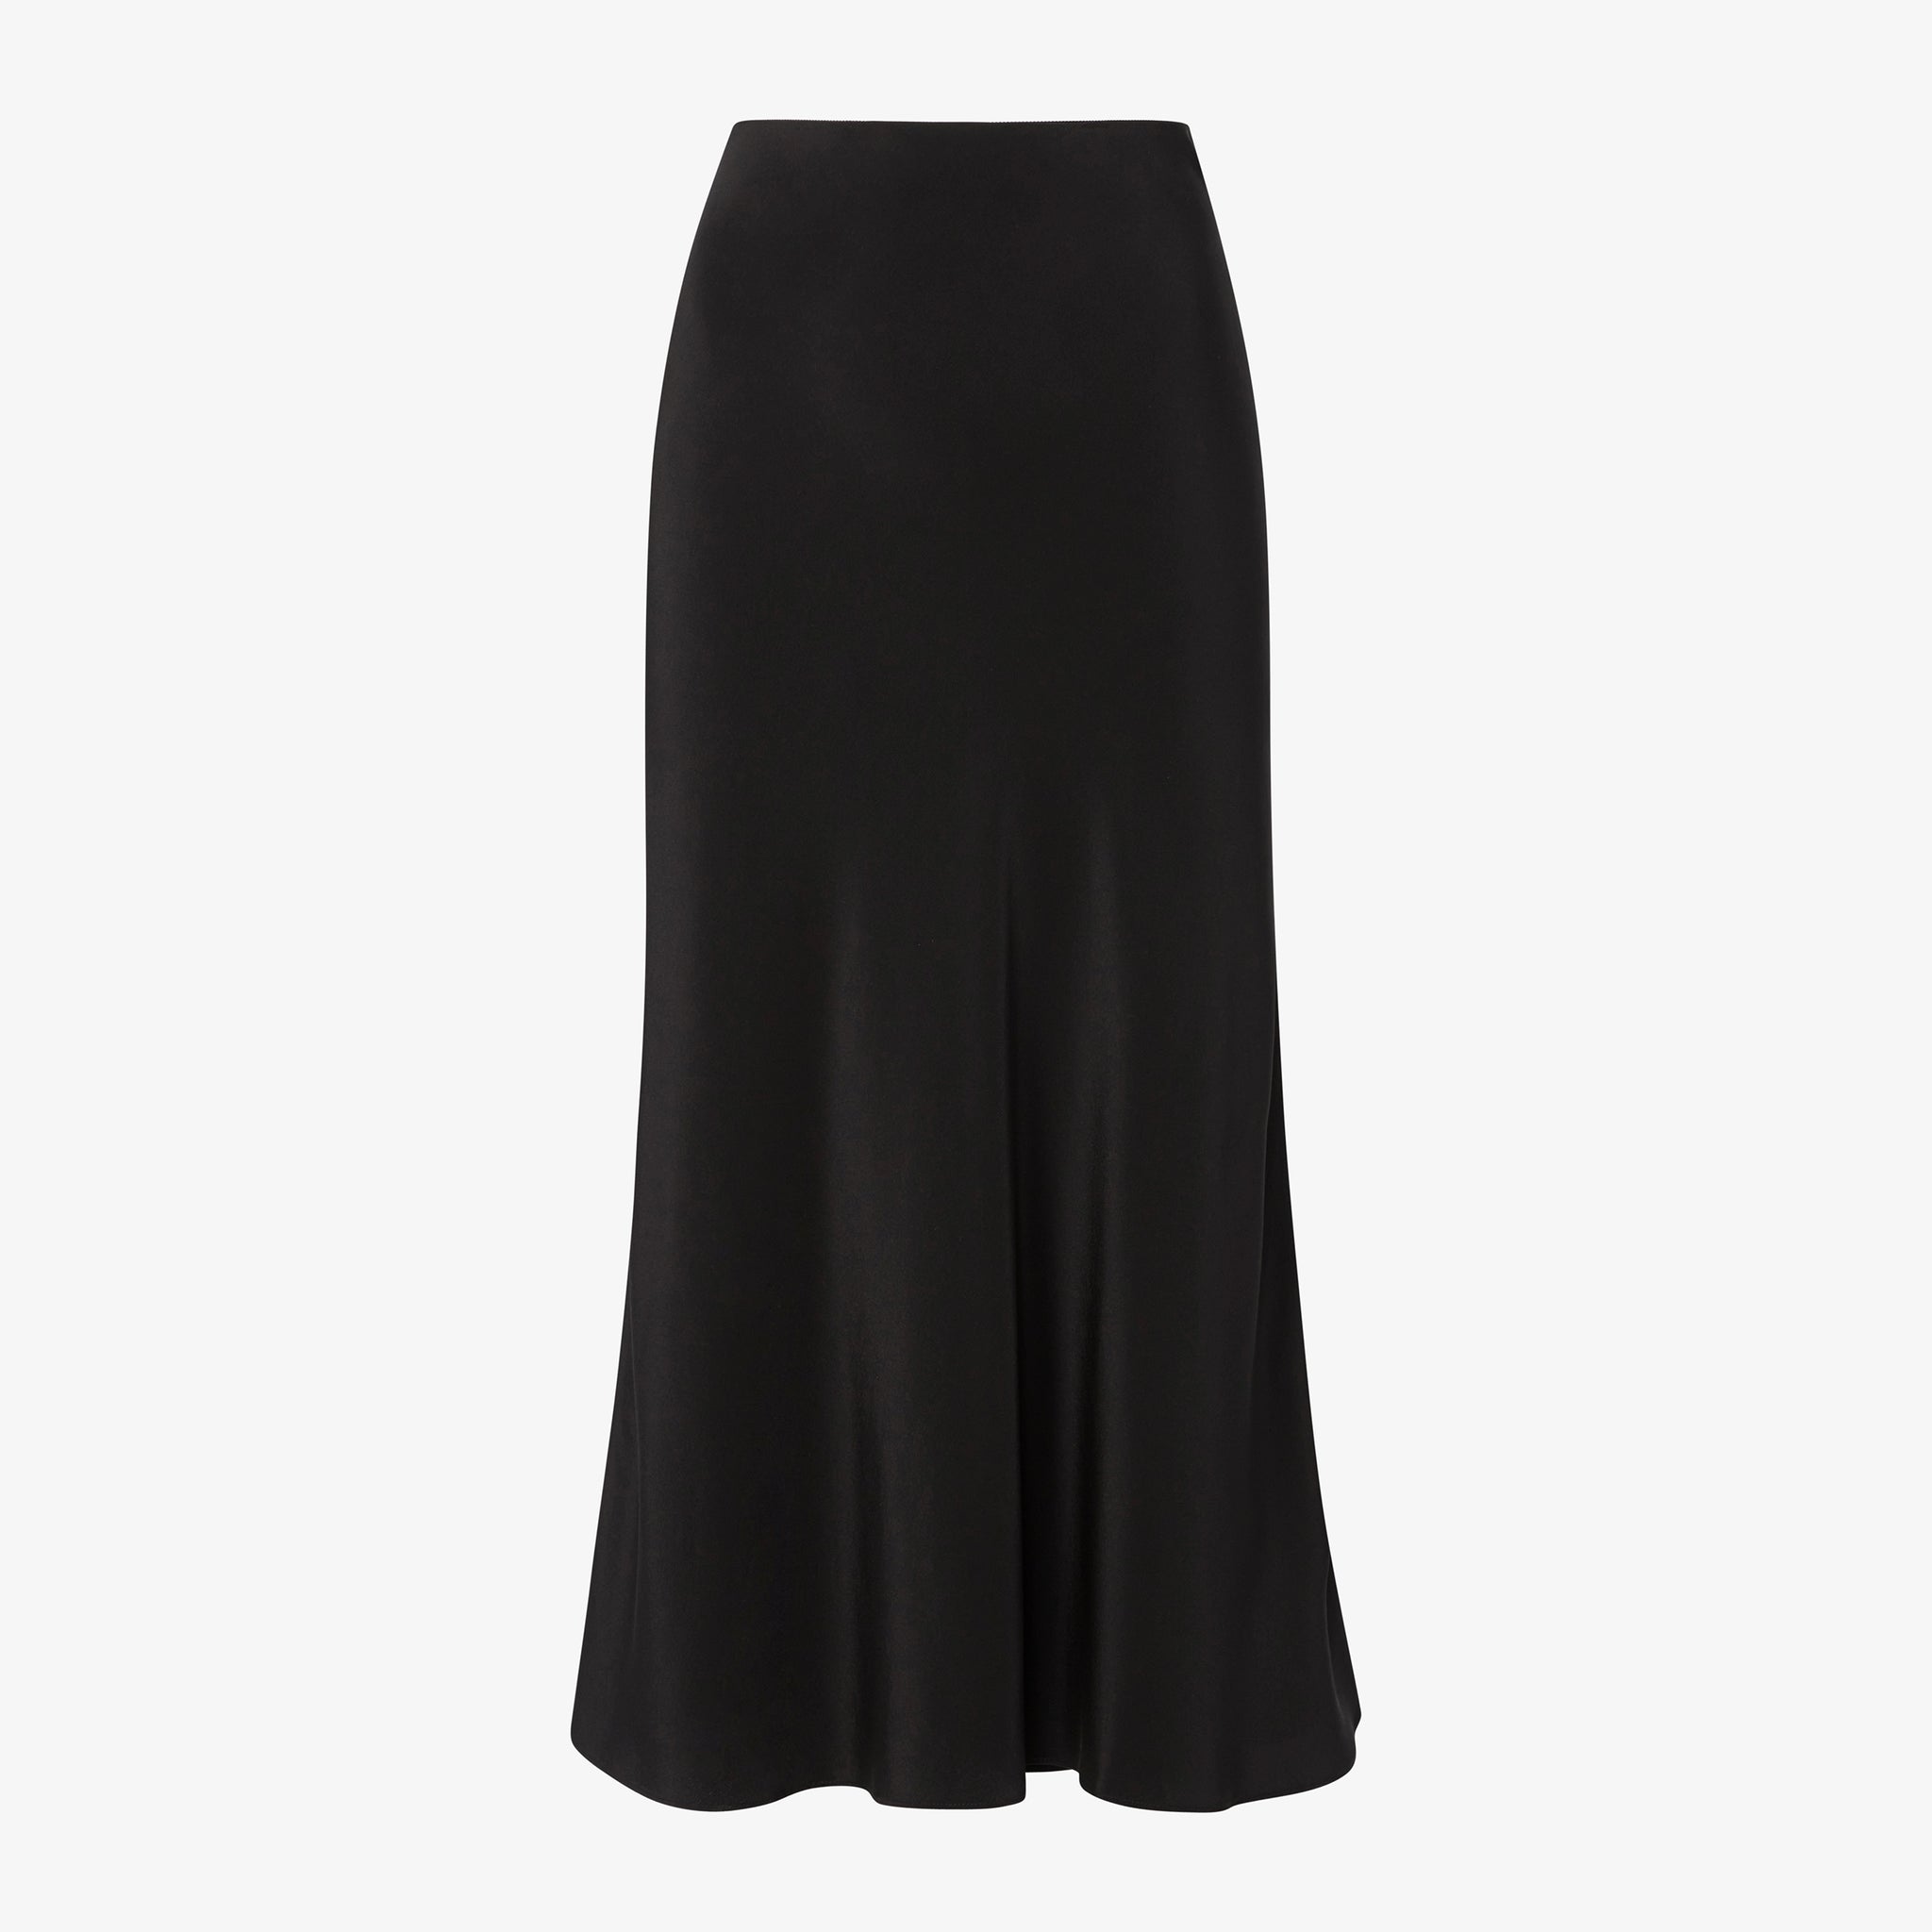 Packshot image of the Orchard Skirt - Washable Silk in Black